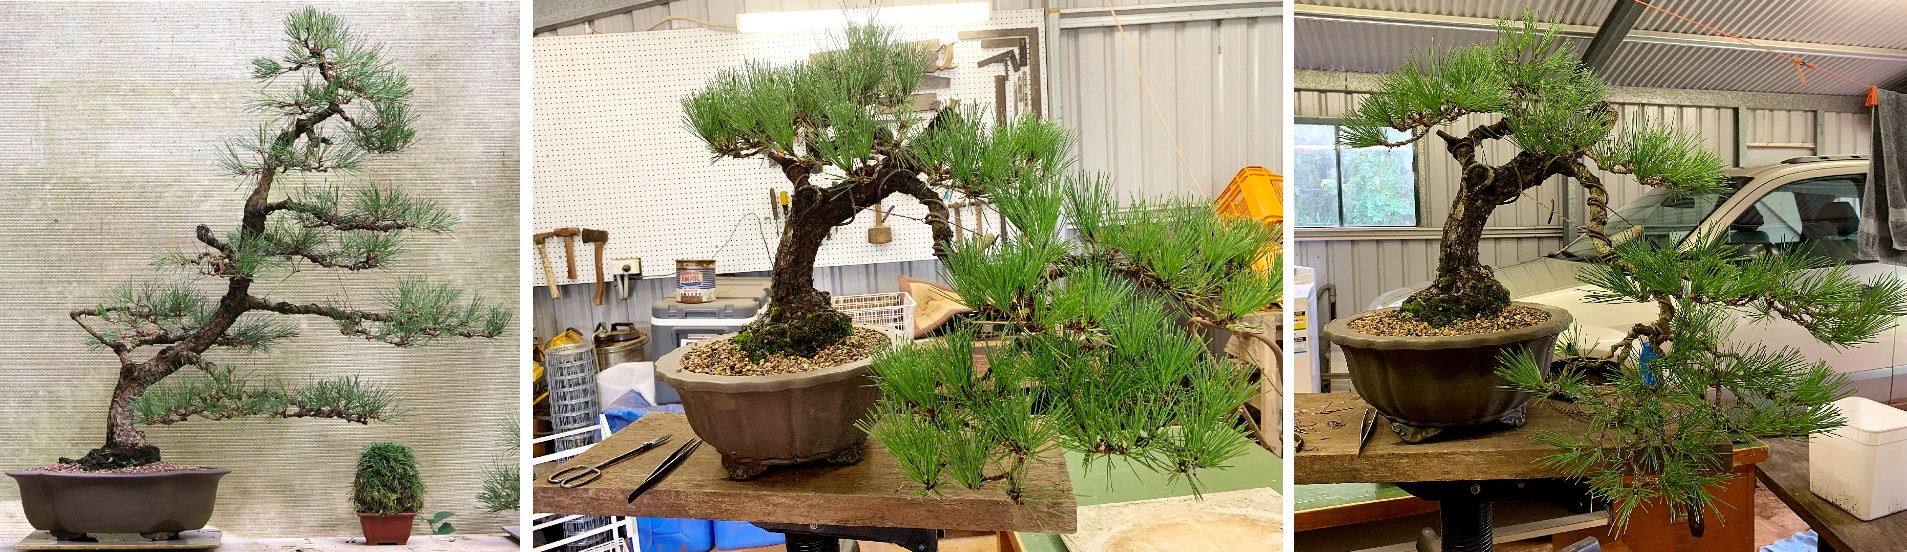 japanese black pine transformed